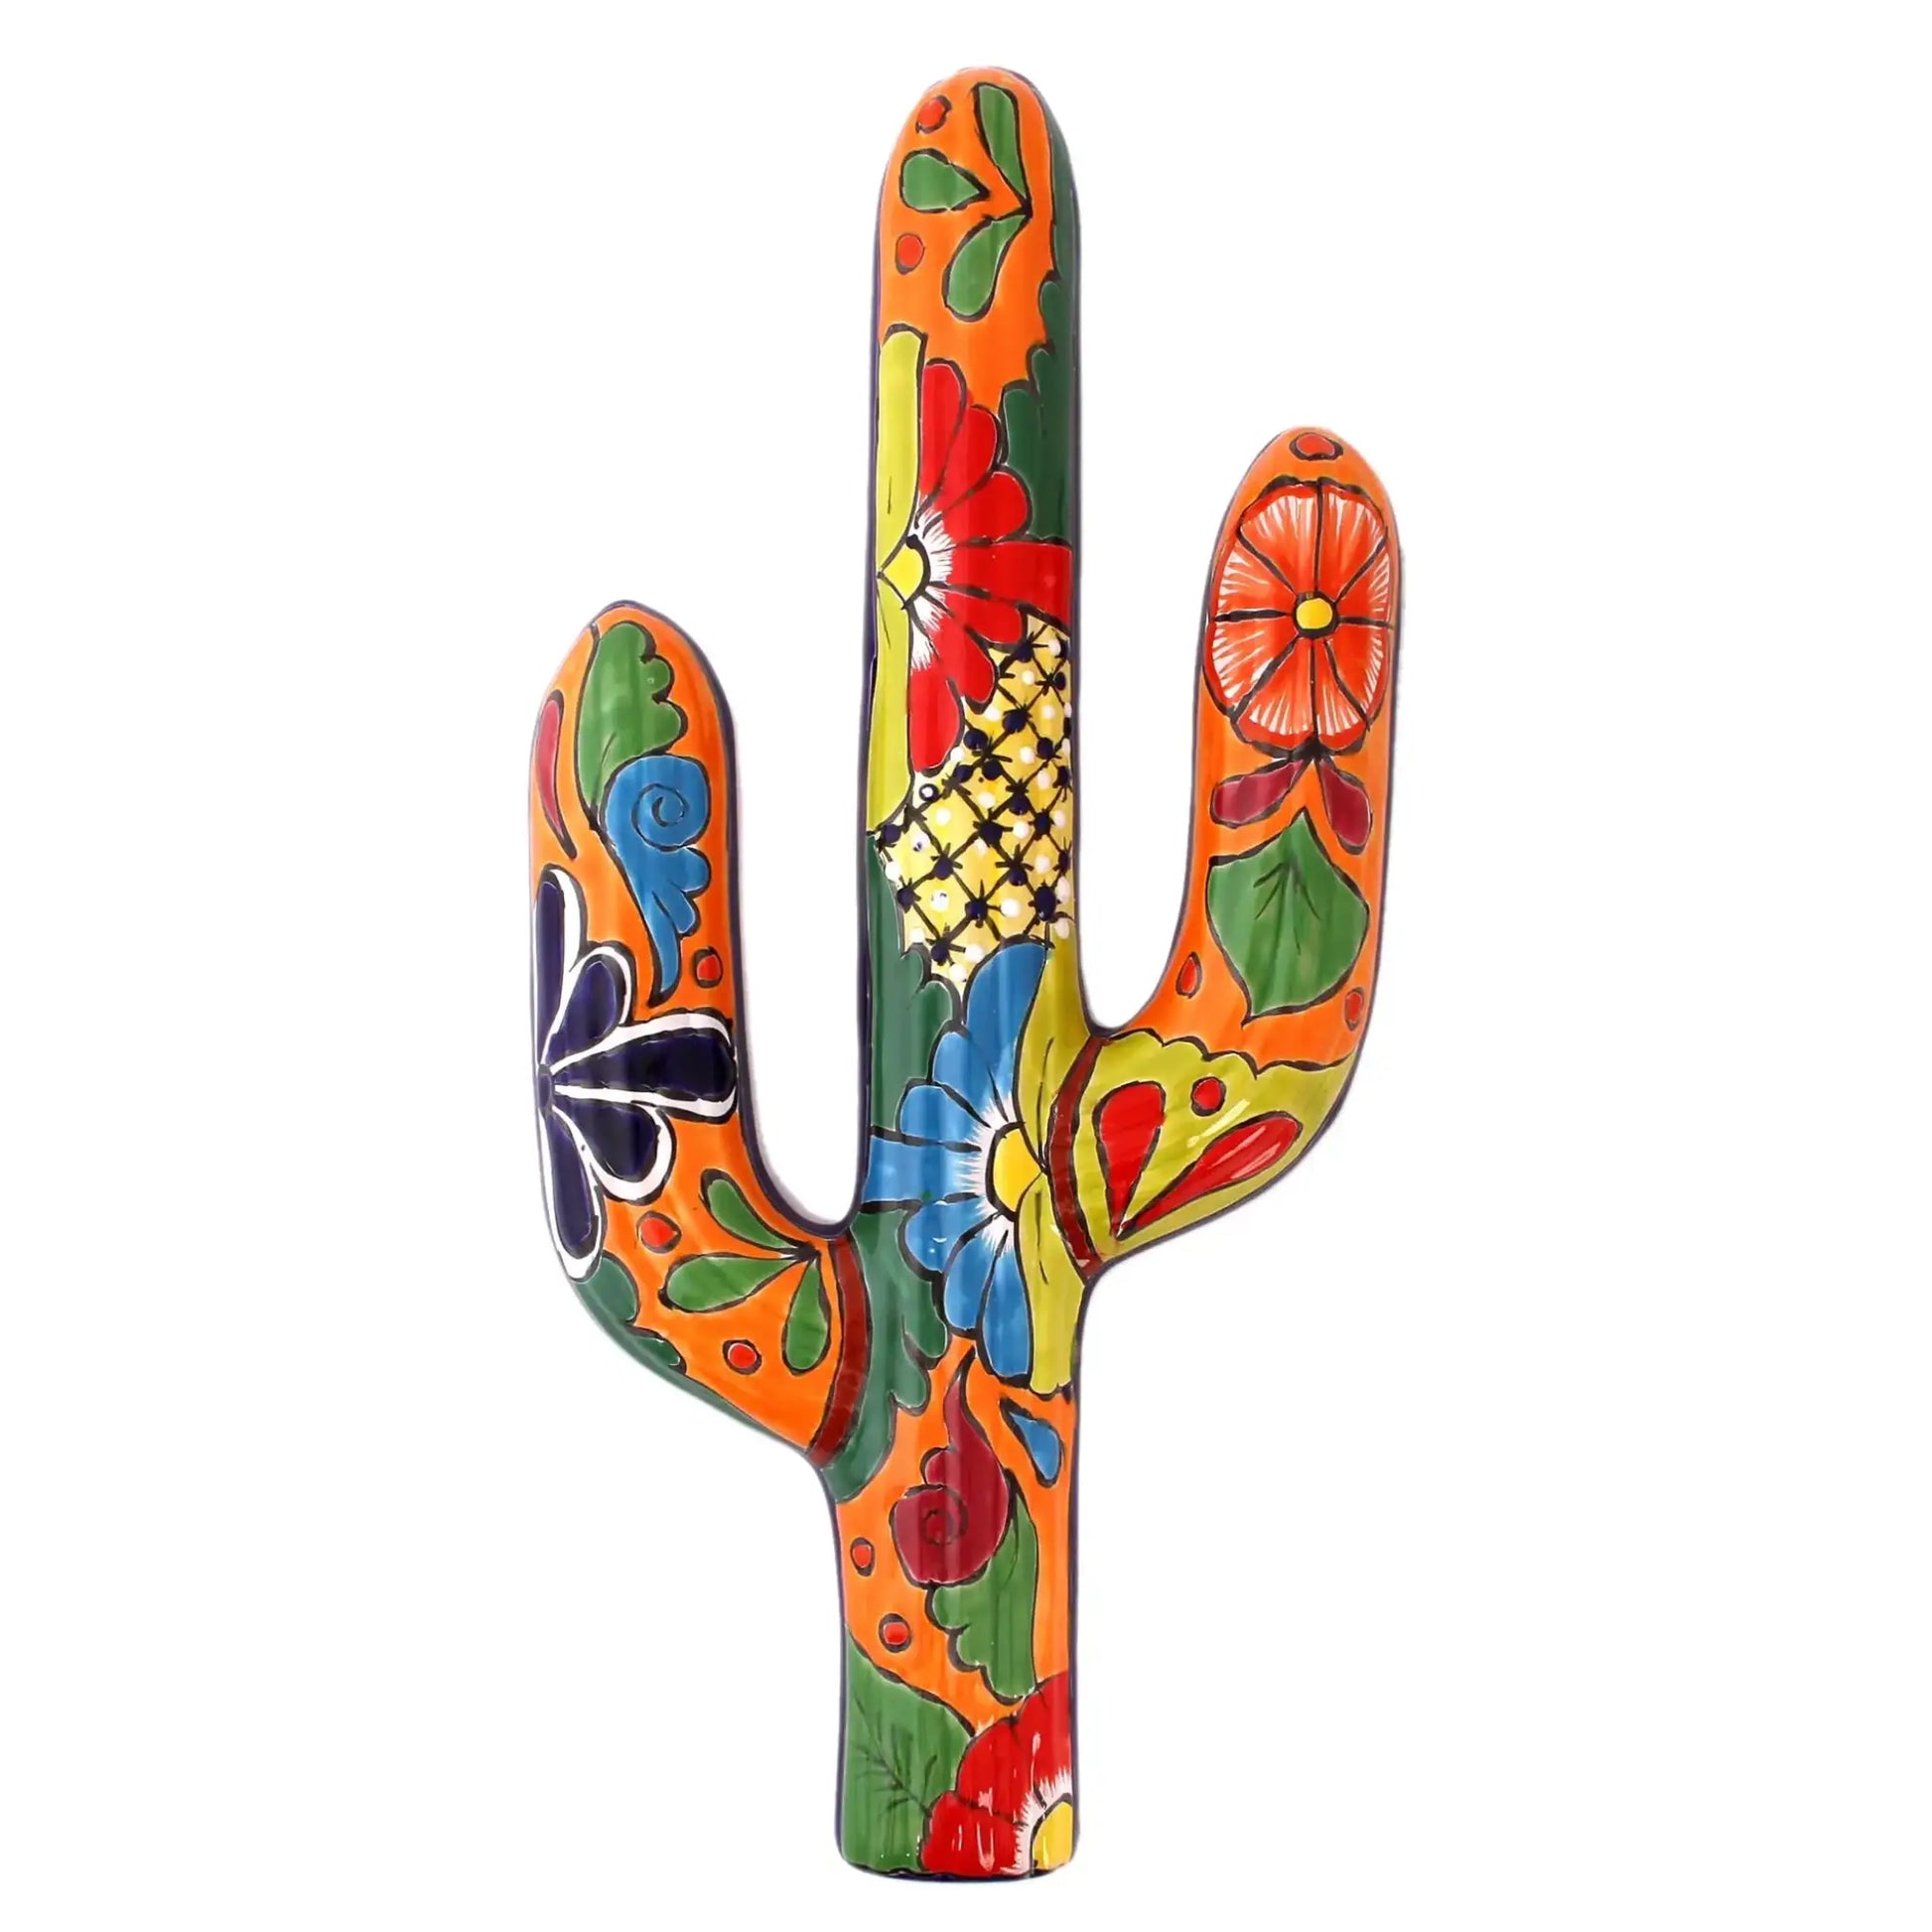 Desert Saguaro - Floral Cactus Talavera-Style Ceramic Wall